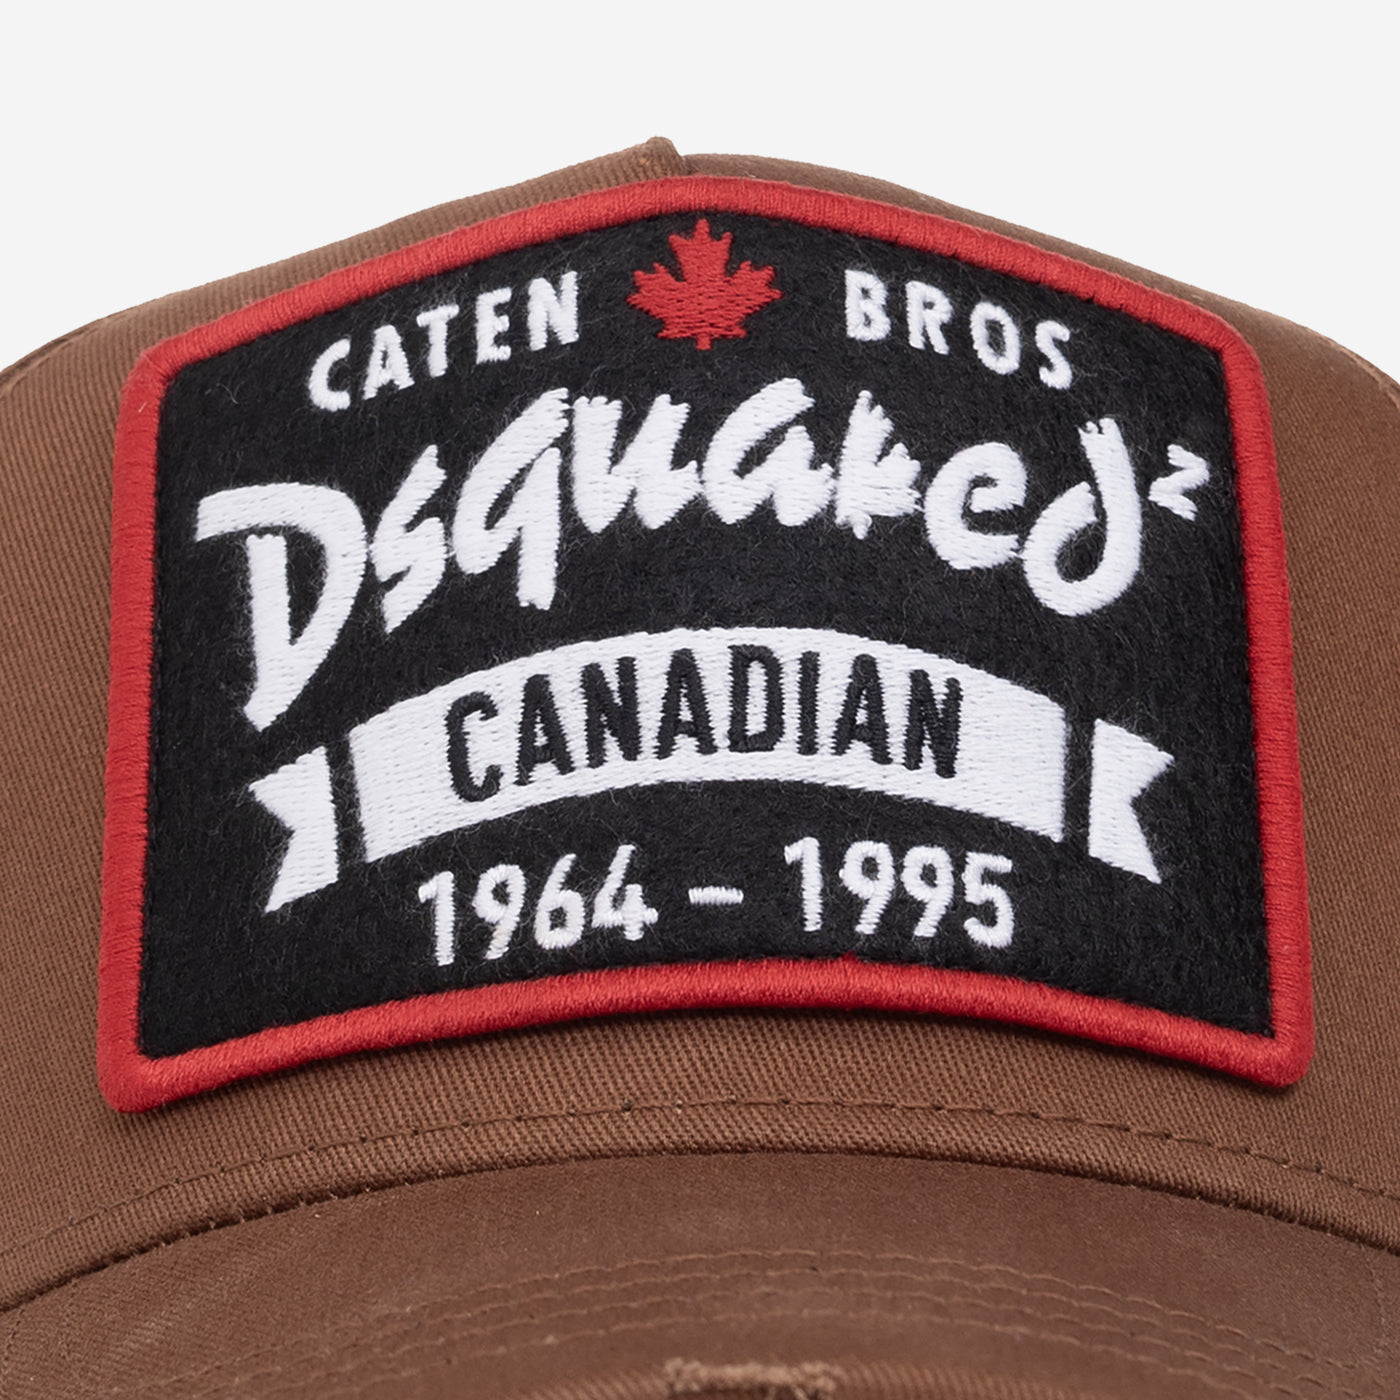 DSquared2 Canadian Logo Patch Baseball Cap